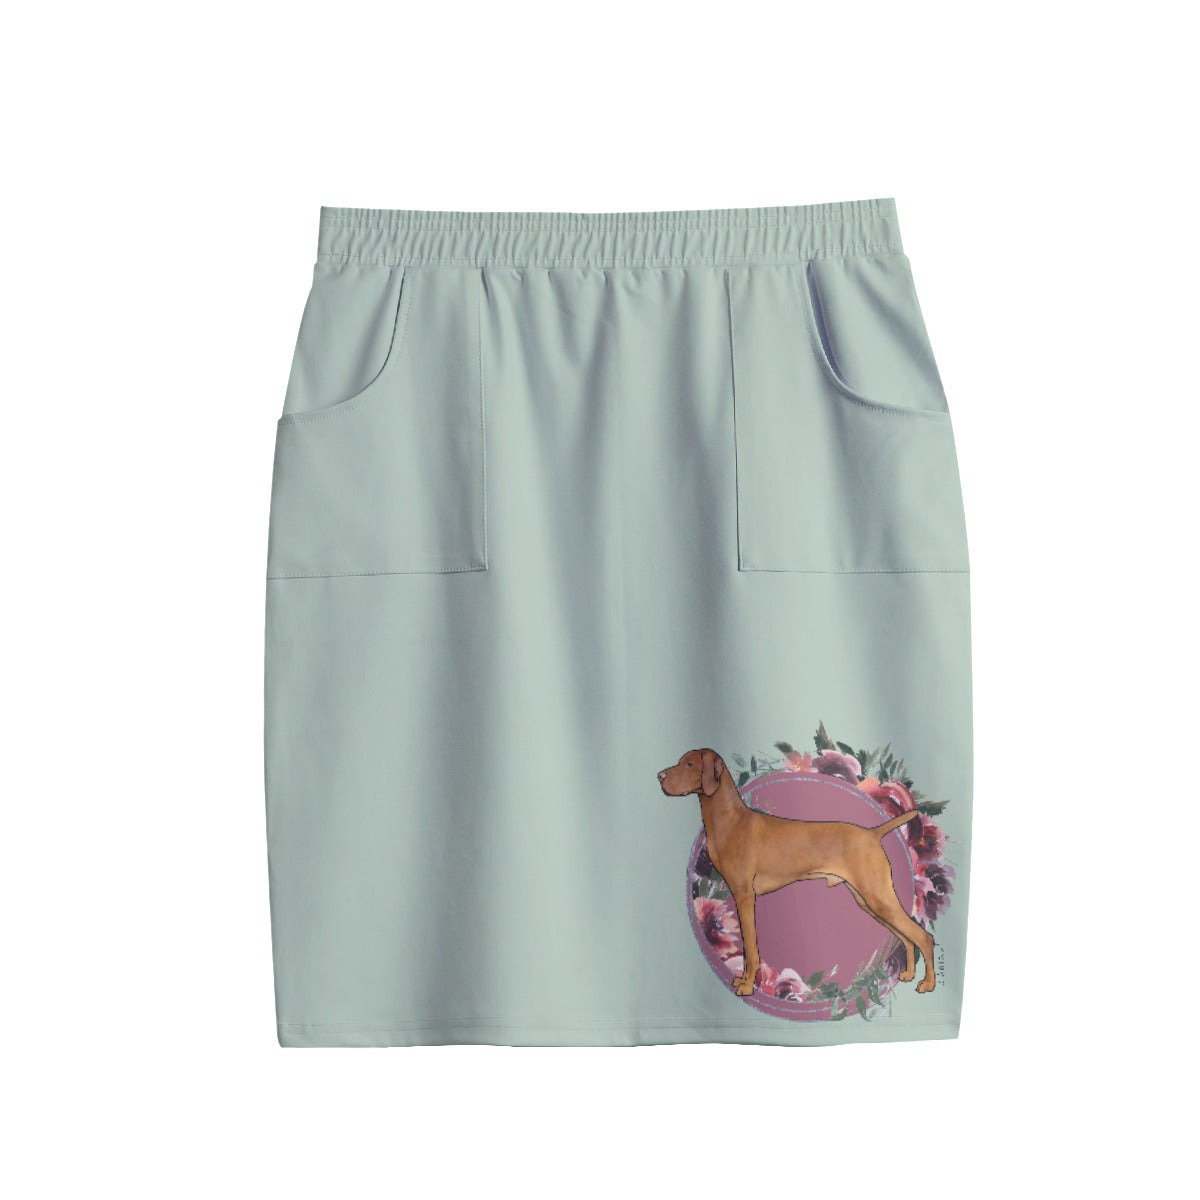 All-Over Print Women's Short Pencil Skirt